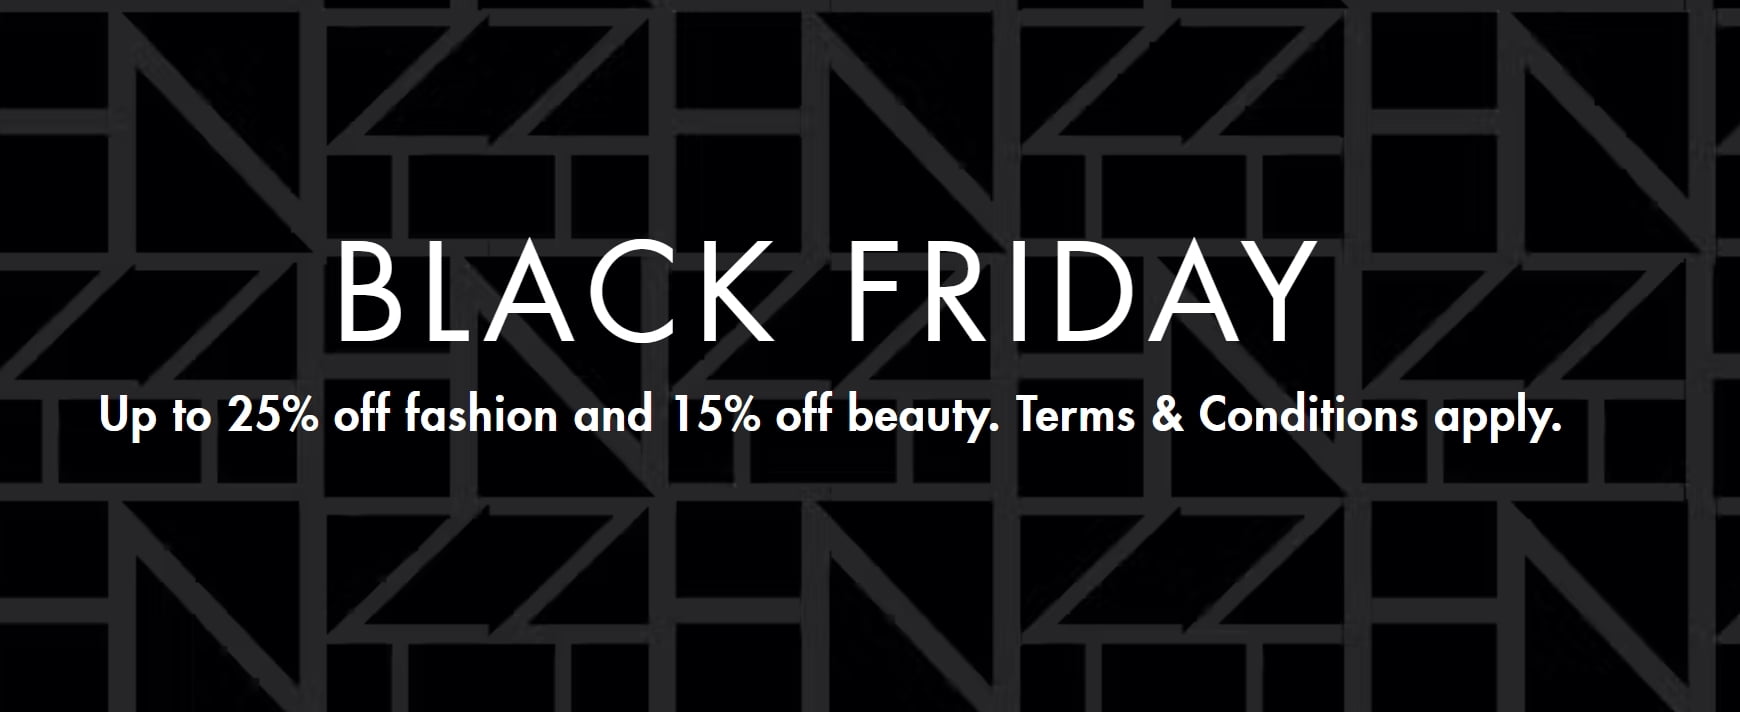 Black Friday at Harvey Nichols: 25% off Fashion and 15% off Beauty